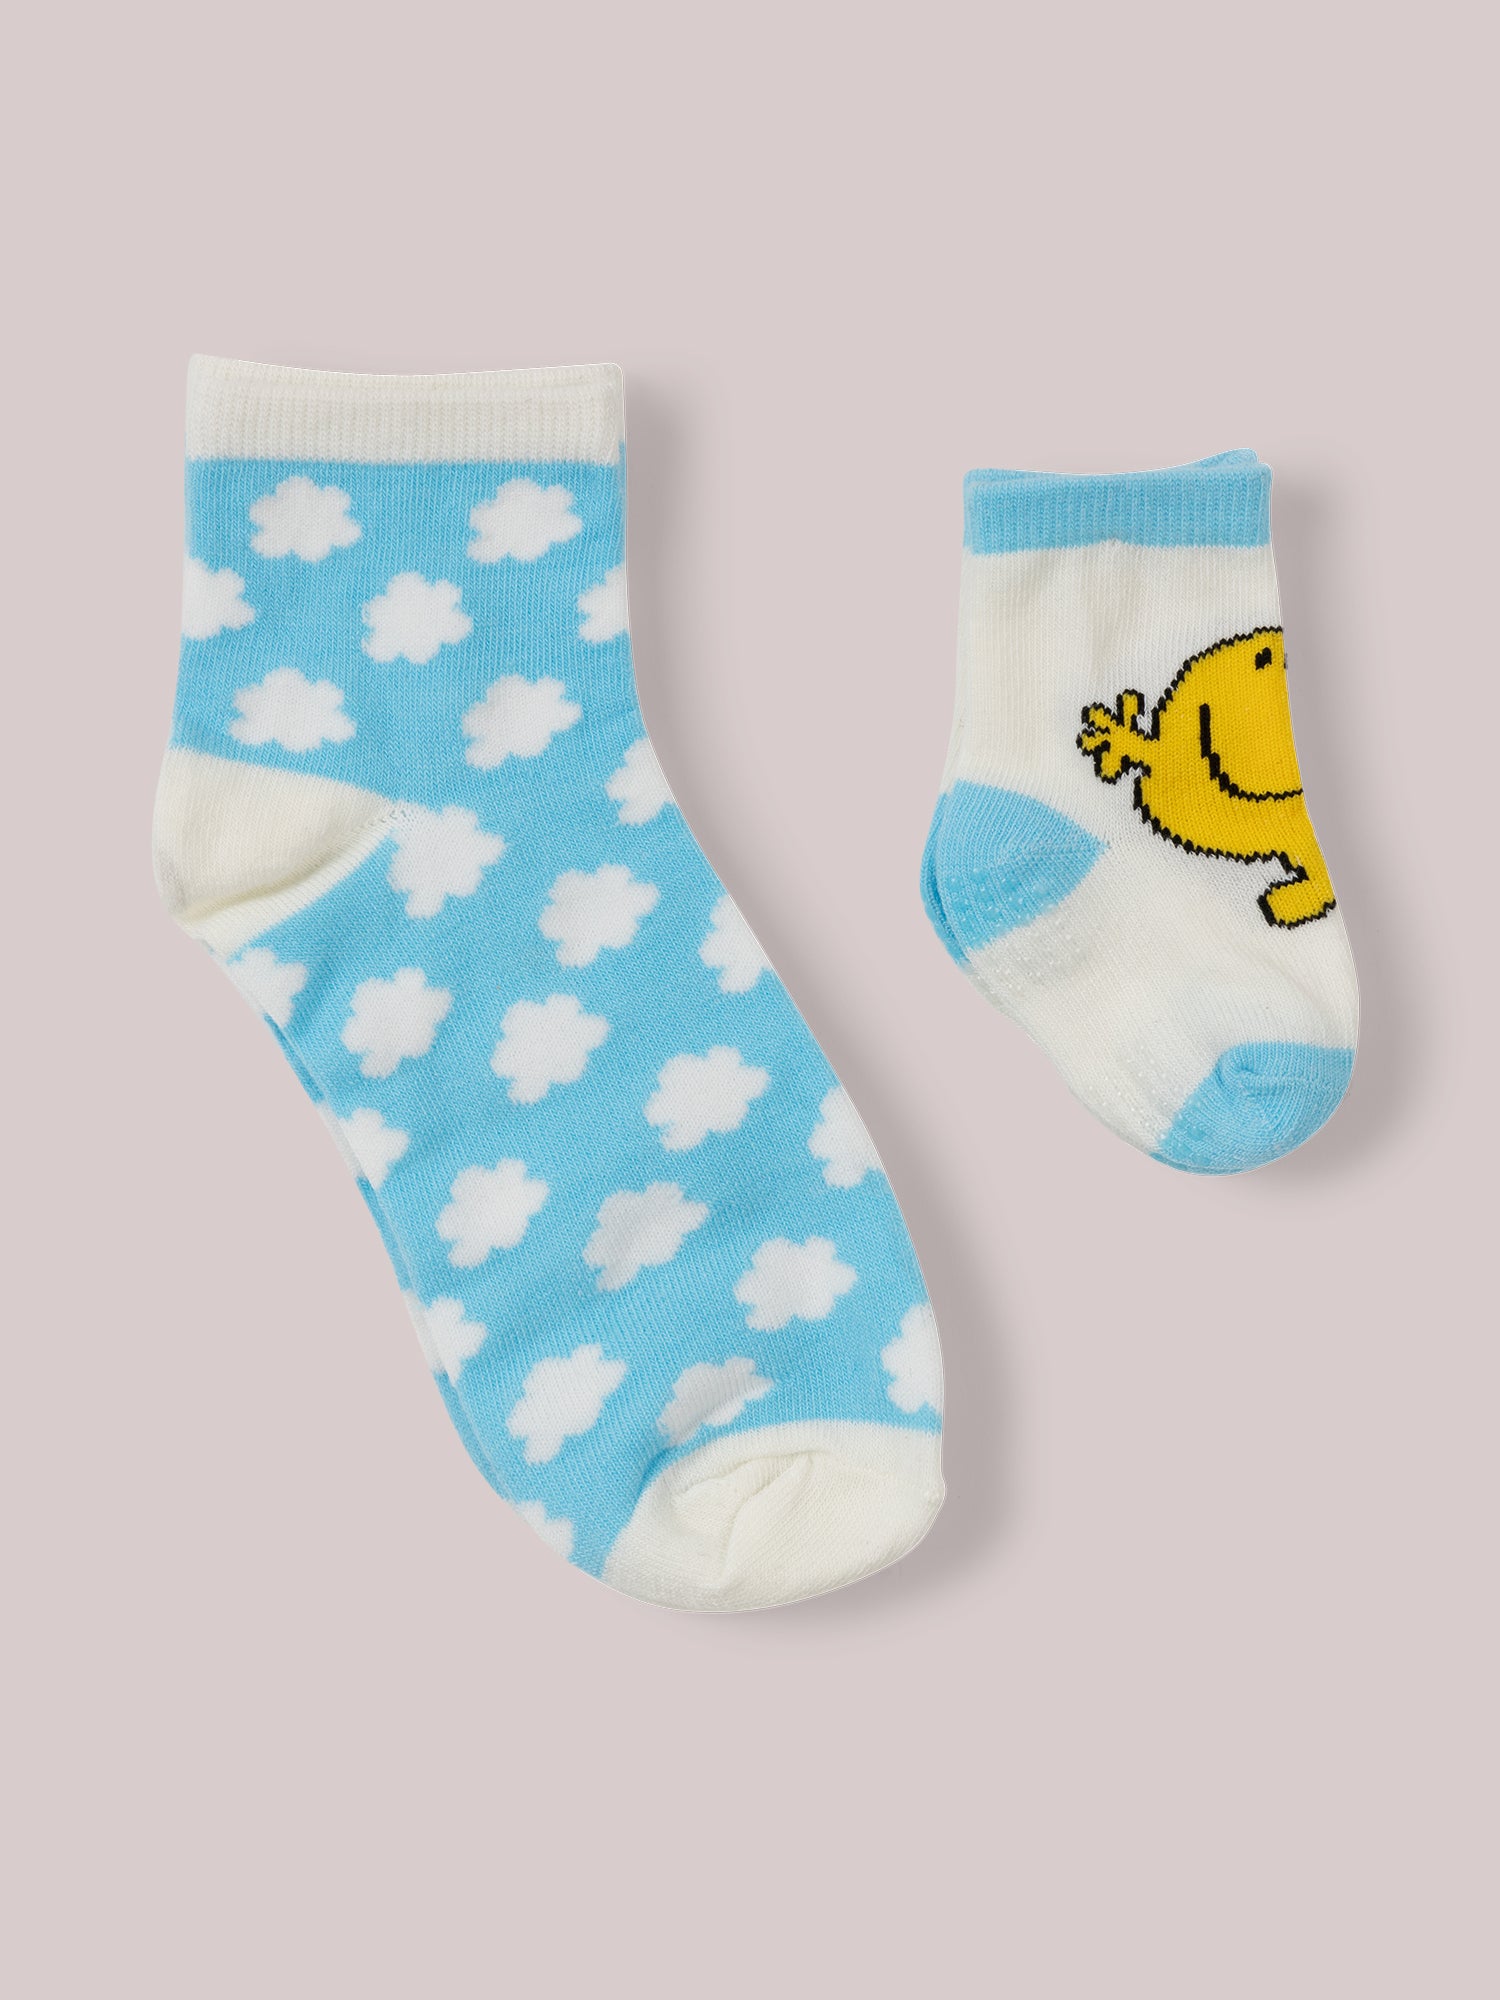 Mama and baby Mr. Happy socks flat lay